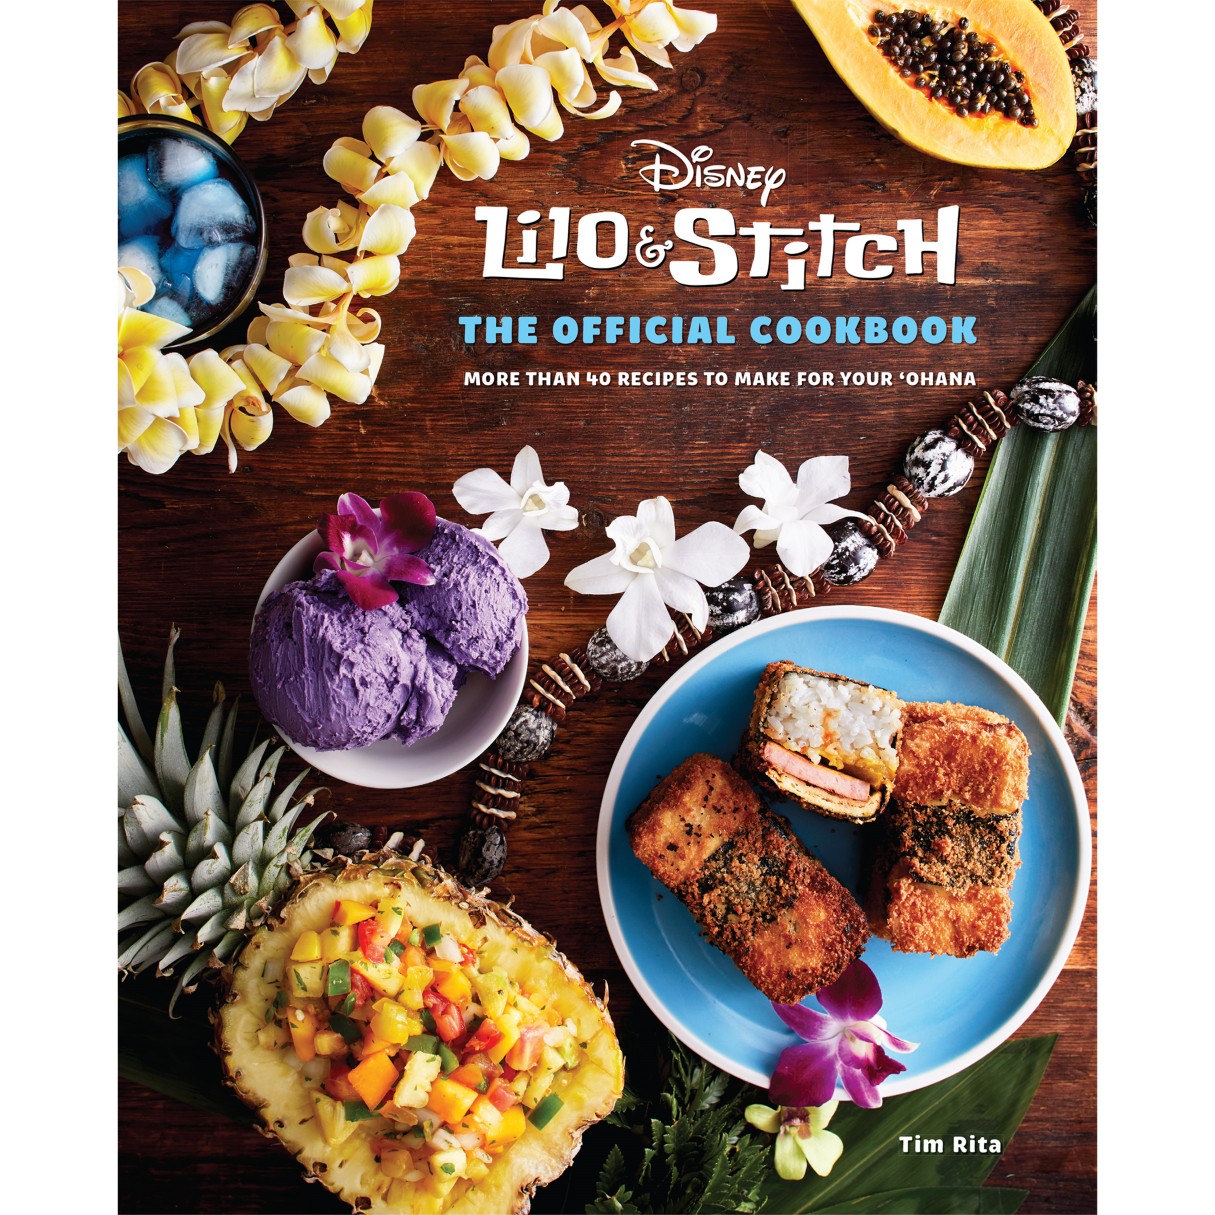 Lilo & Stitch: The Official Cookbook by Tim Rita